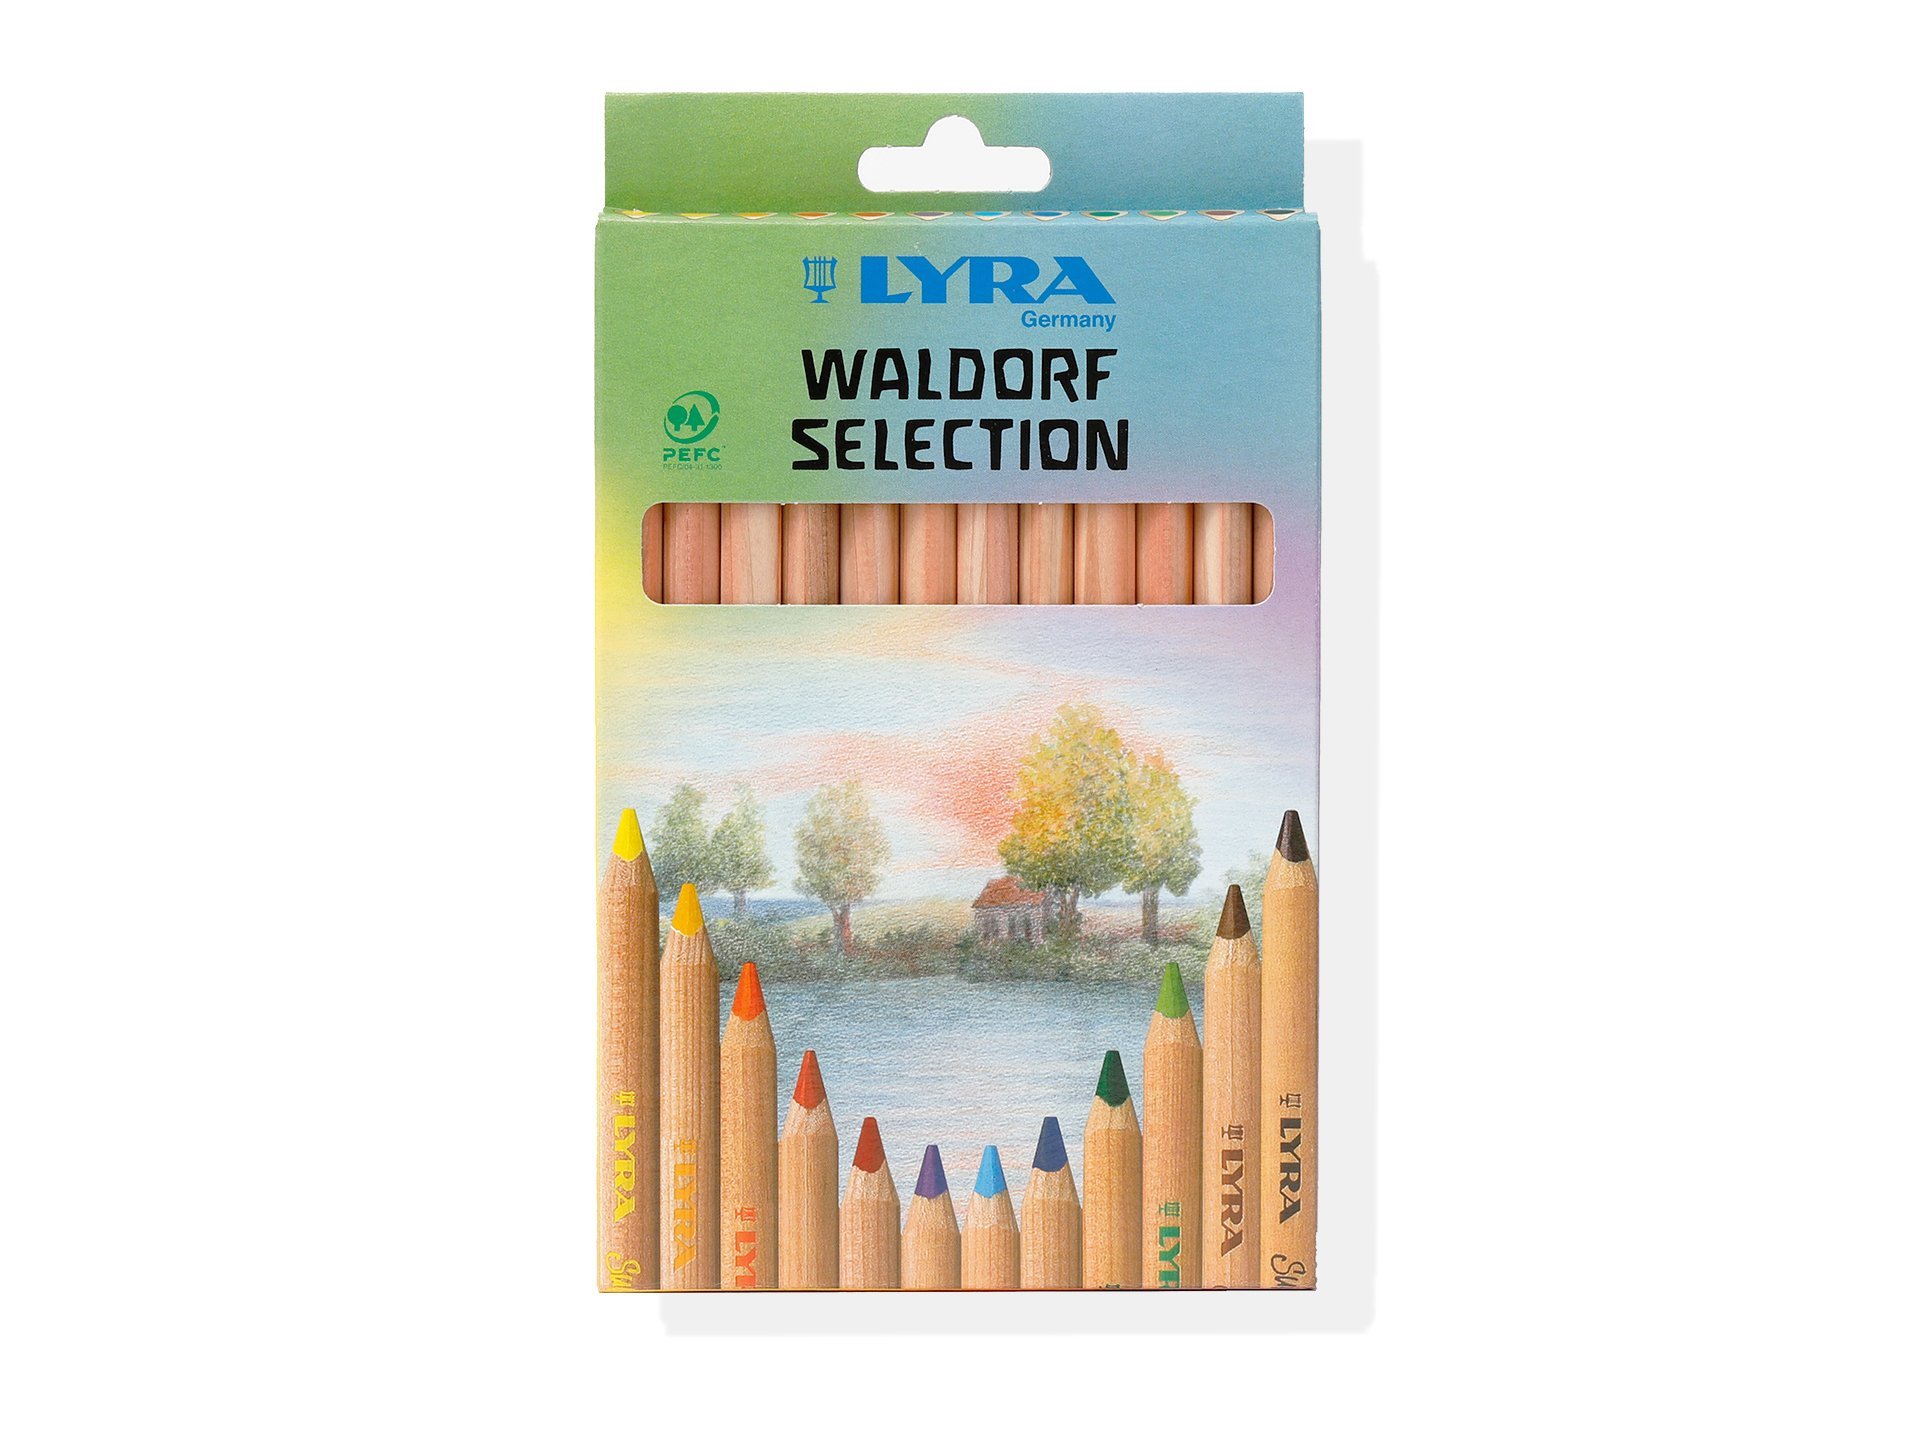 Lyra Súper Ferby Waldorf Selección 3711121 Lápices Colorear 12 surtidos colores naturales en Caja 